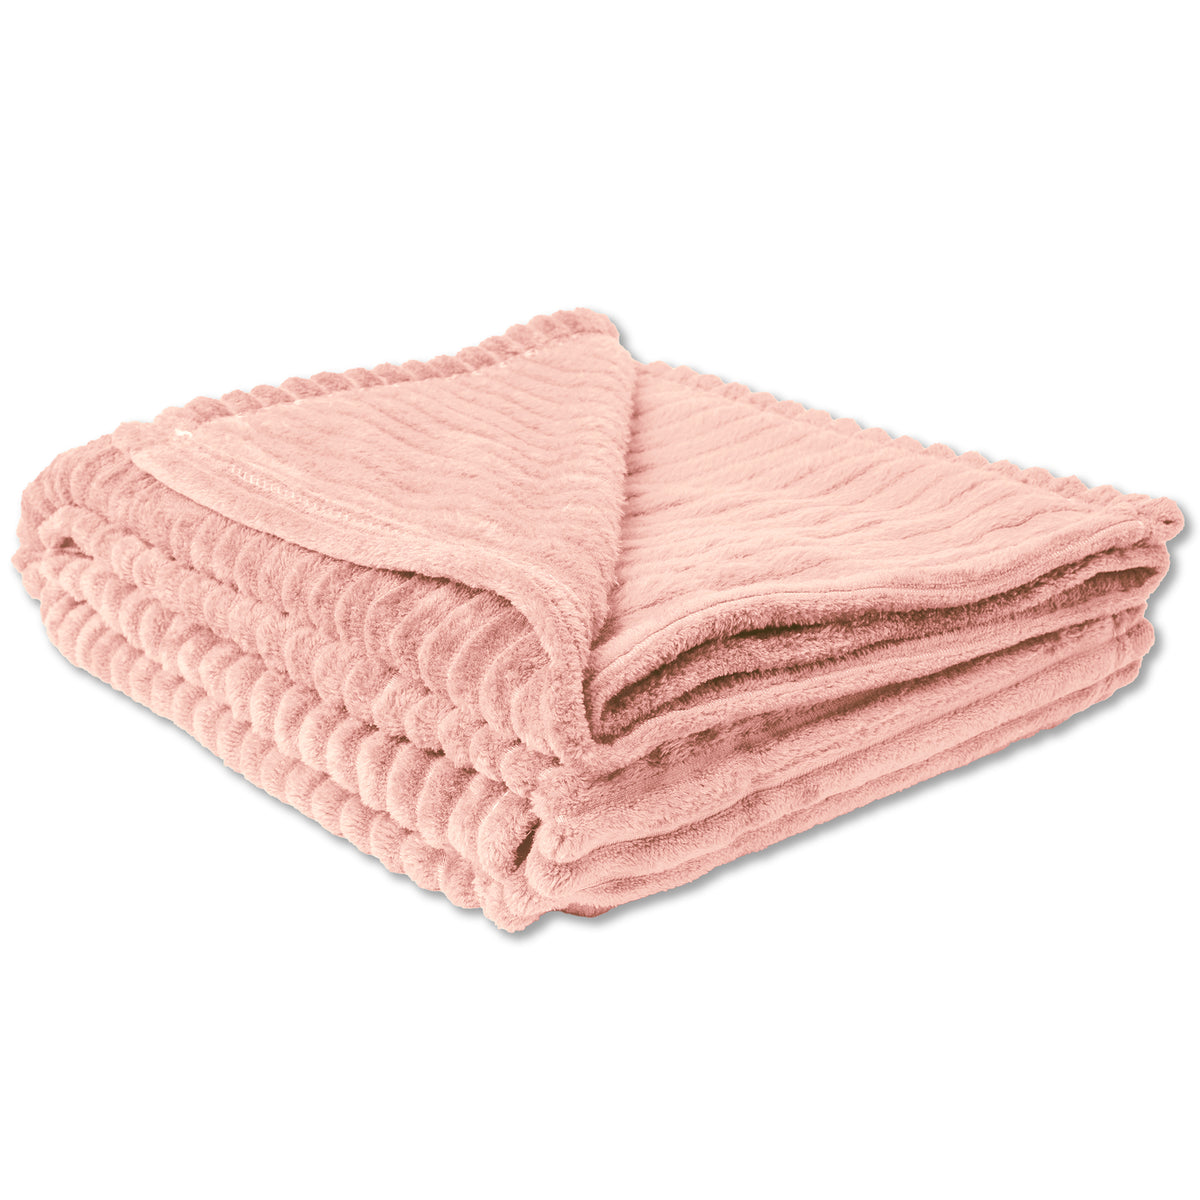 Flannel Fleece Rib Blanket Pink